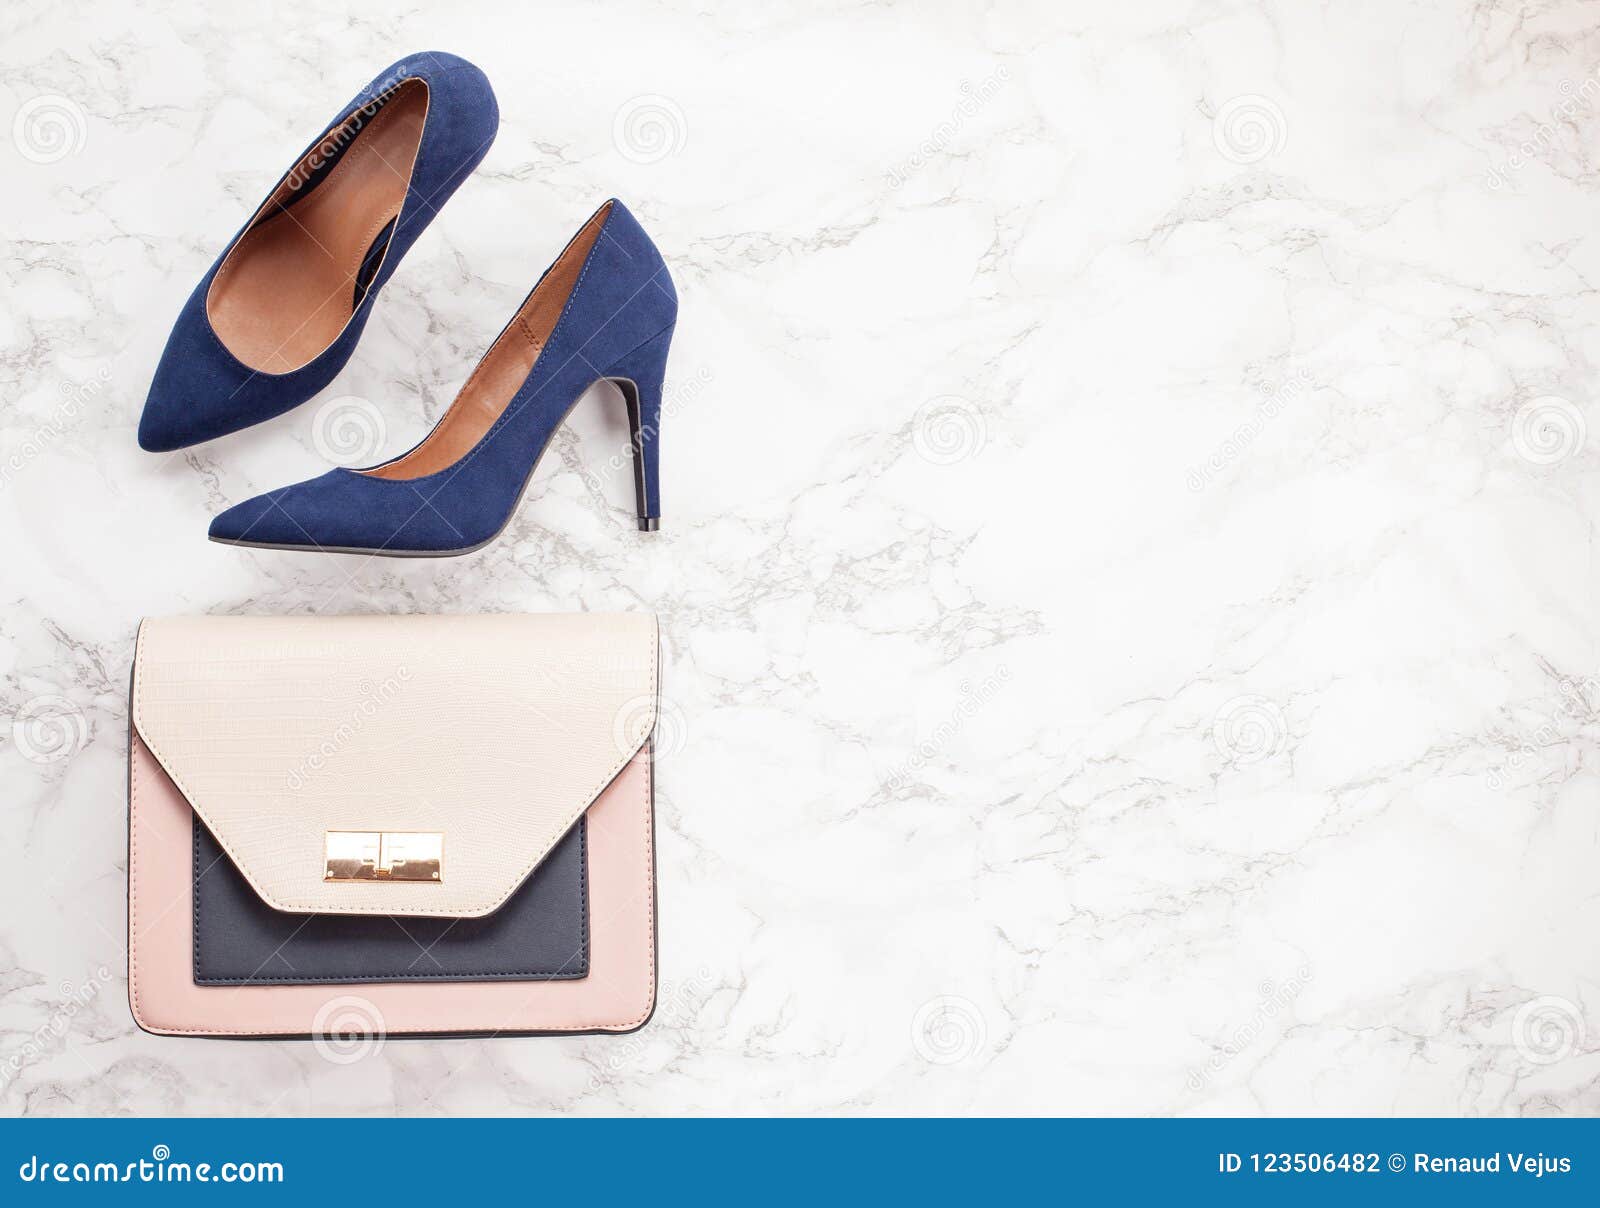 pastel blue high heels